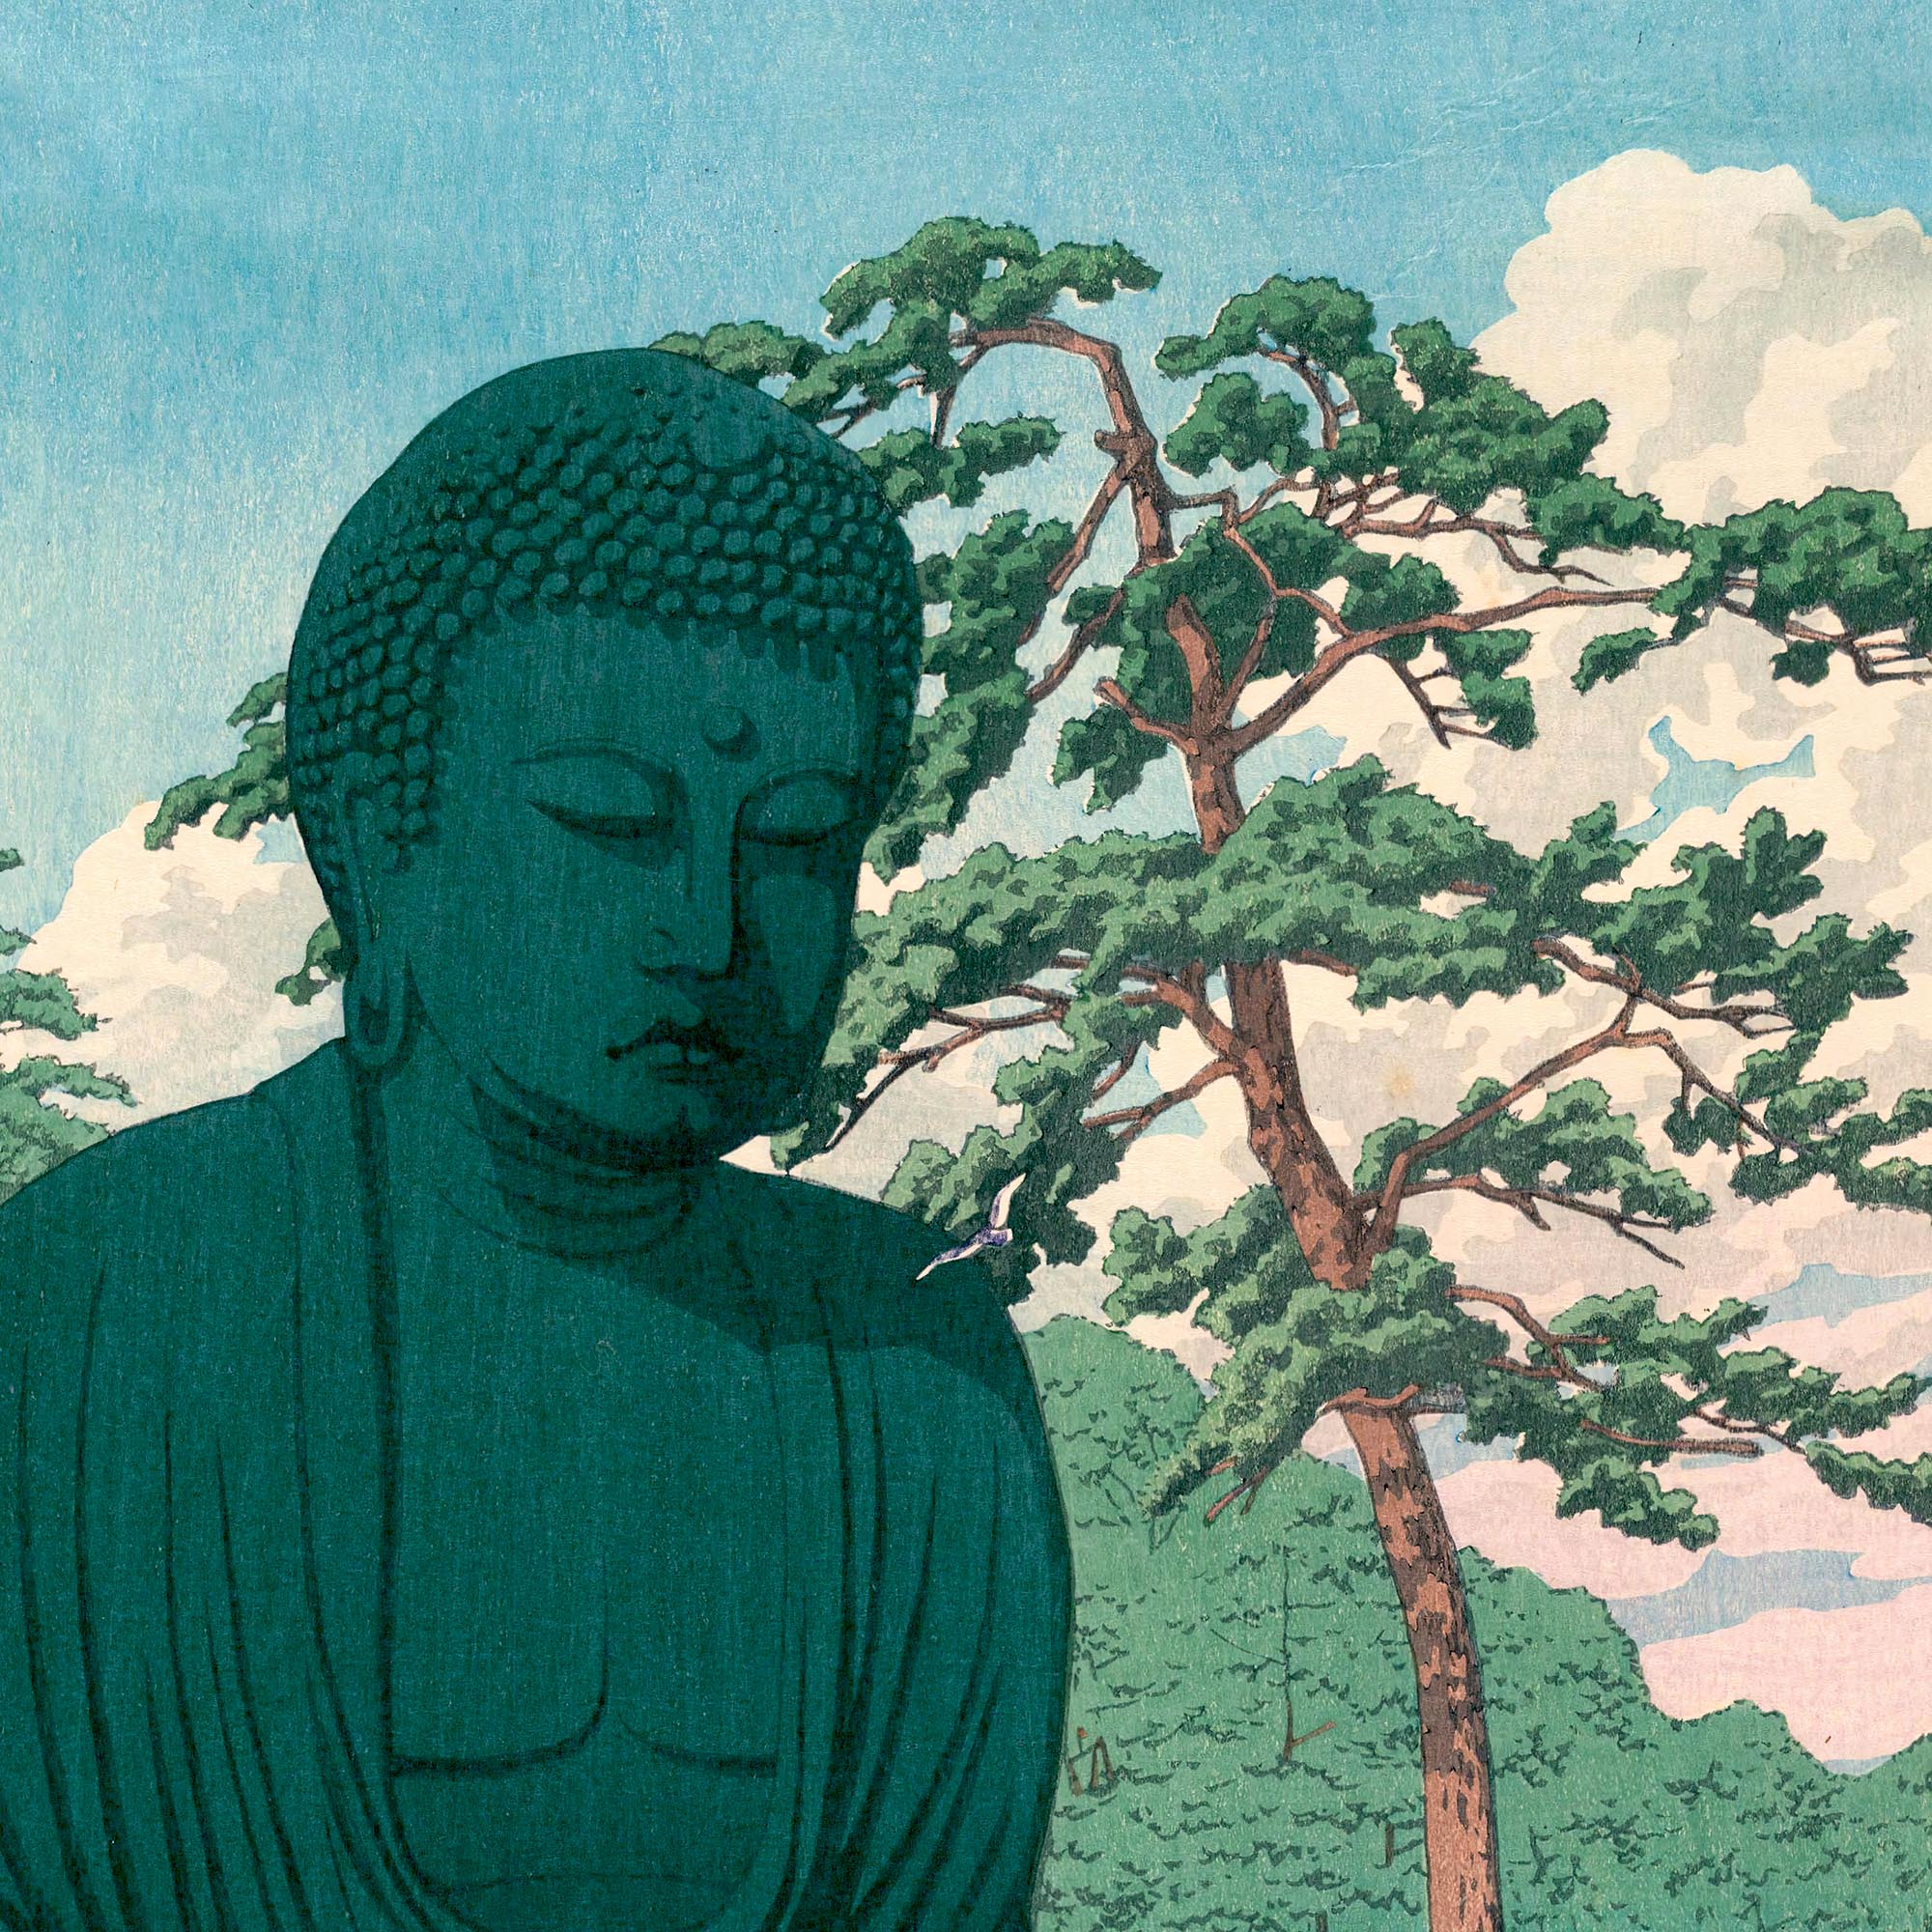 giclee 4"x6" The Great Buddha of Kamakura (Kawase Hasui) Antique Japanese Edo Woodblock Print Ukiyo-e Vintage Gift Fine Art Print